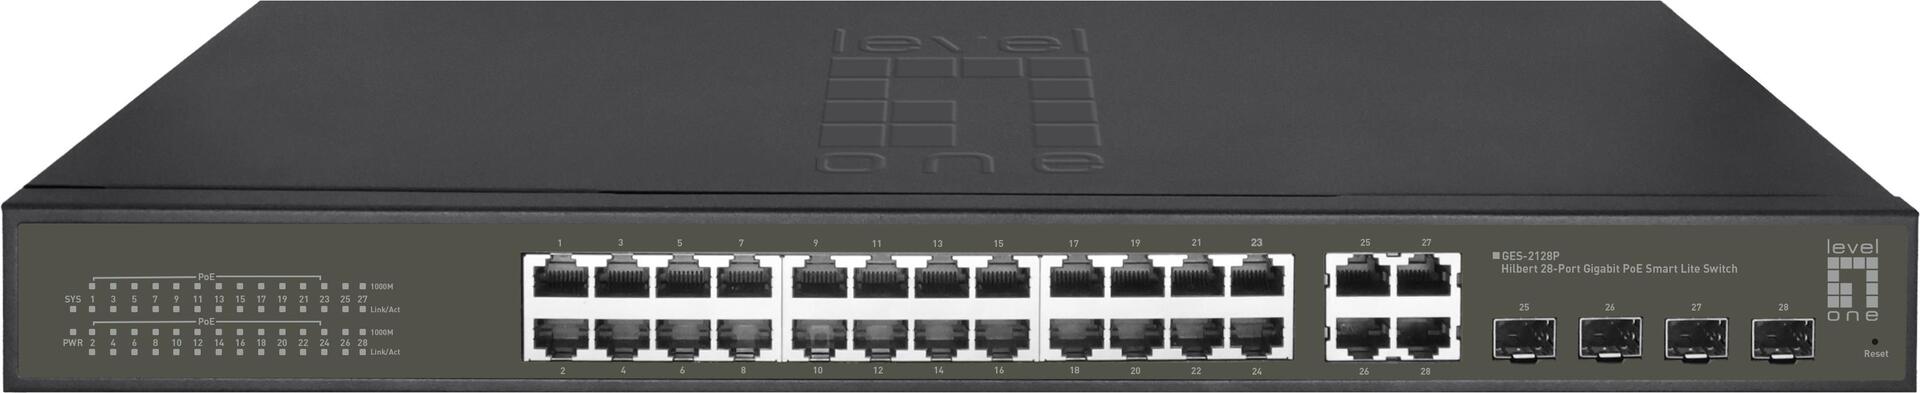 LevelOne Hilbert 28-Port Gigabit PoE Smart Lite Switch (GES-2128P)